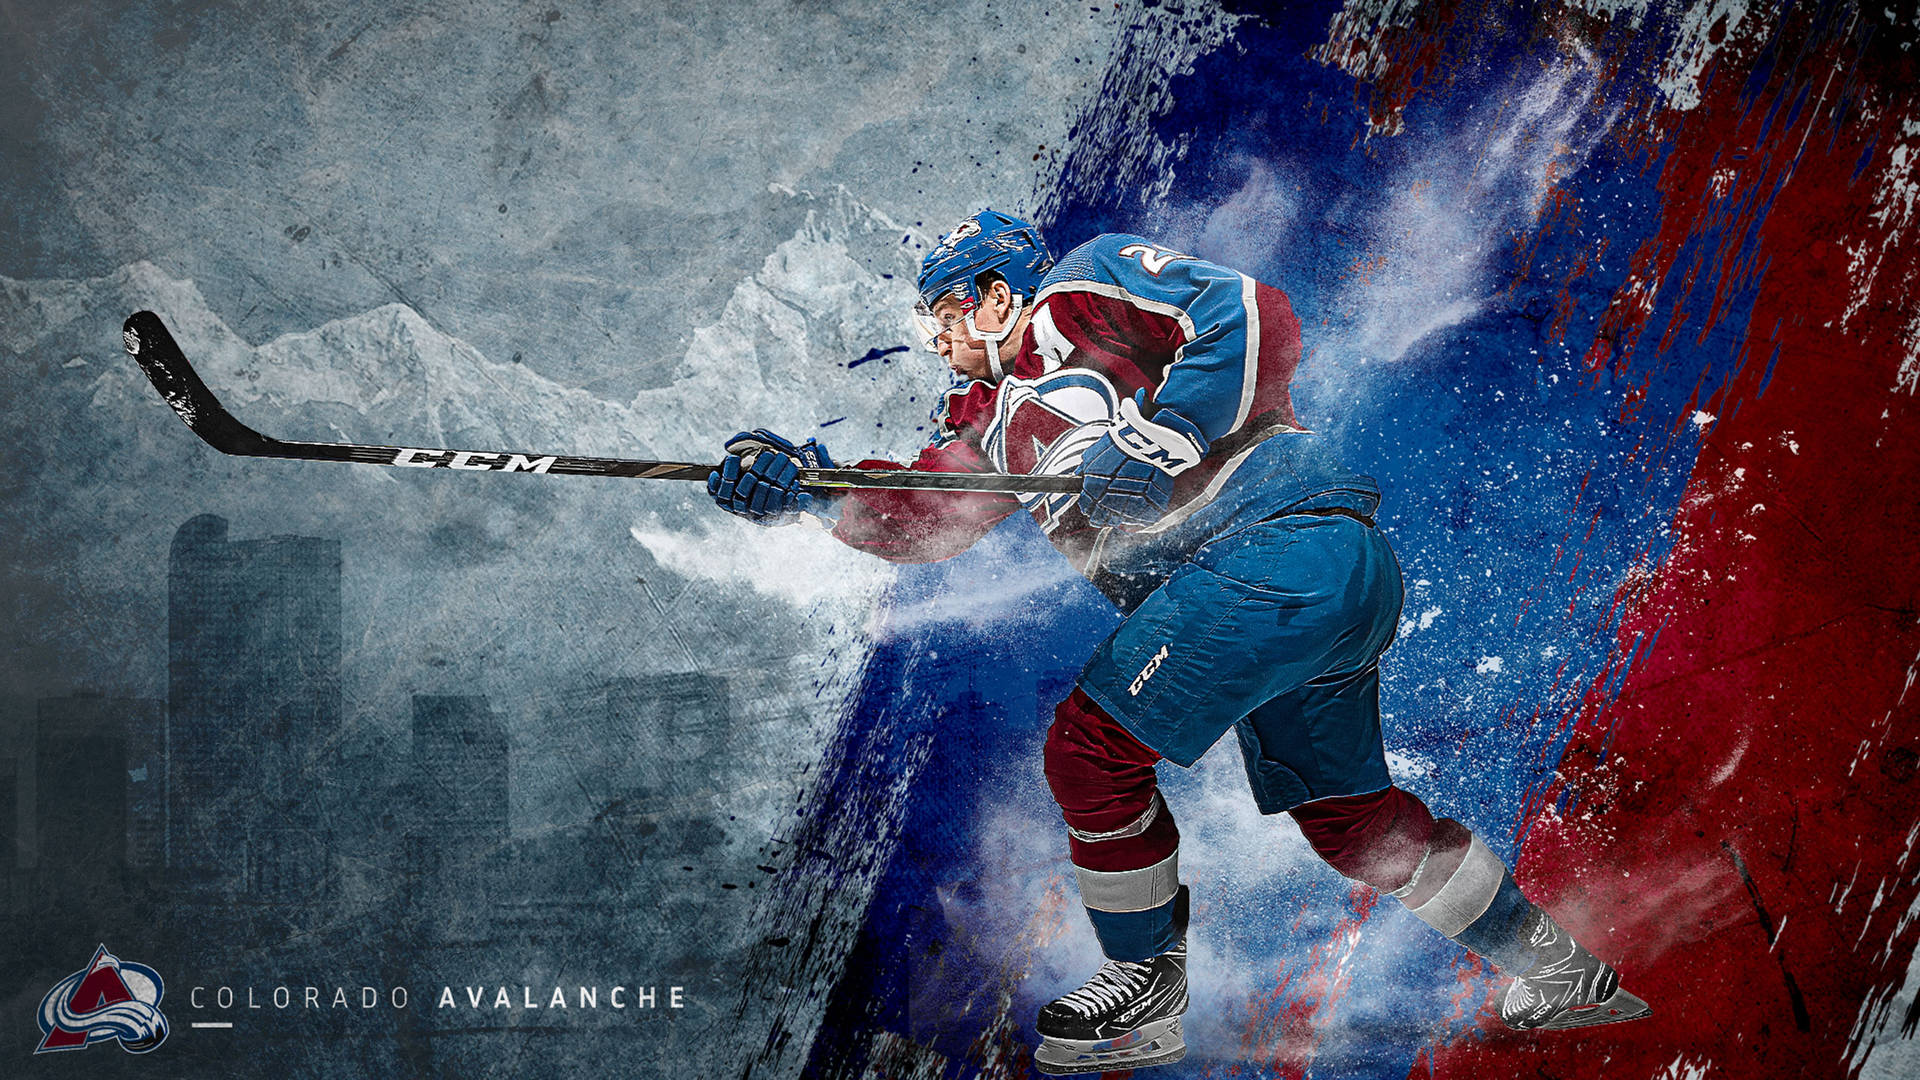 Colorado Avalanche Ice Hockey Team Graphic Design Wallpaper